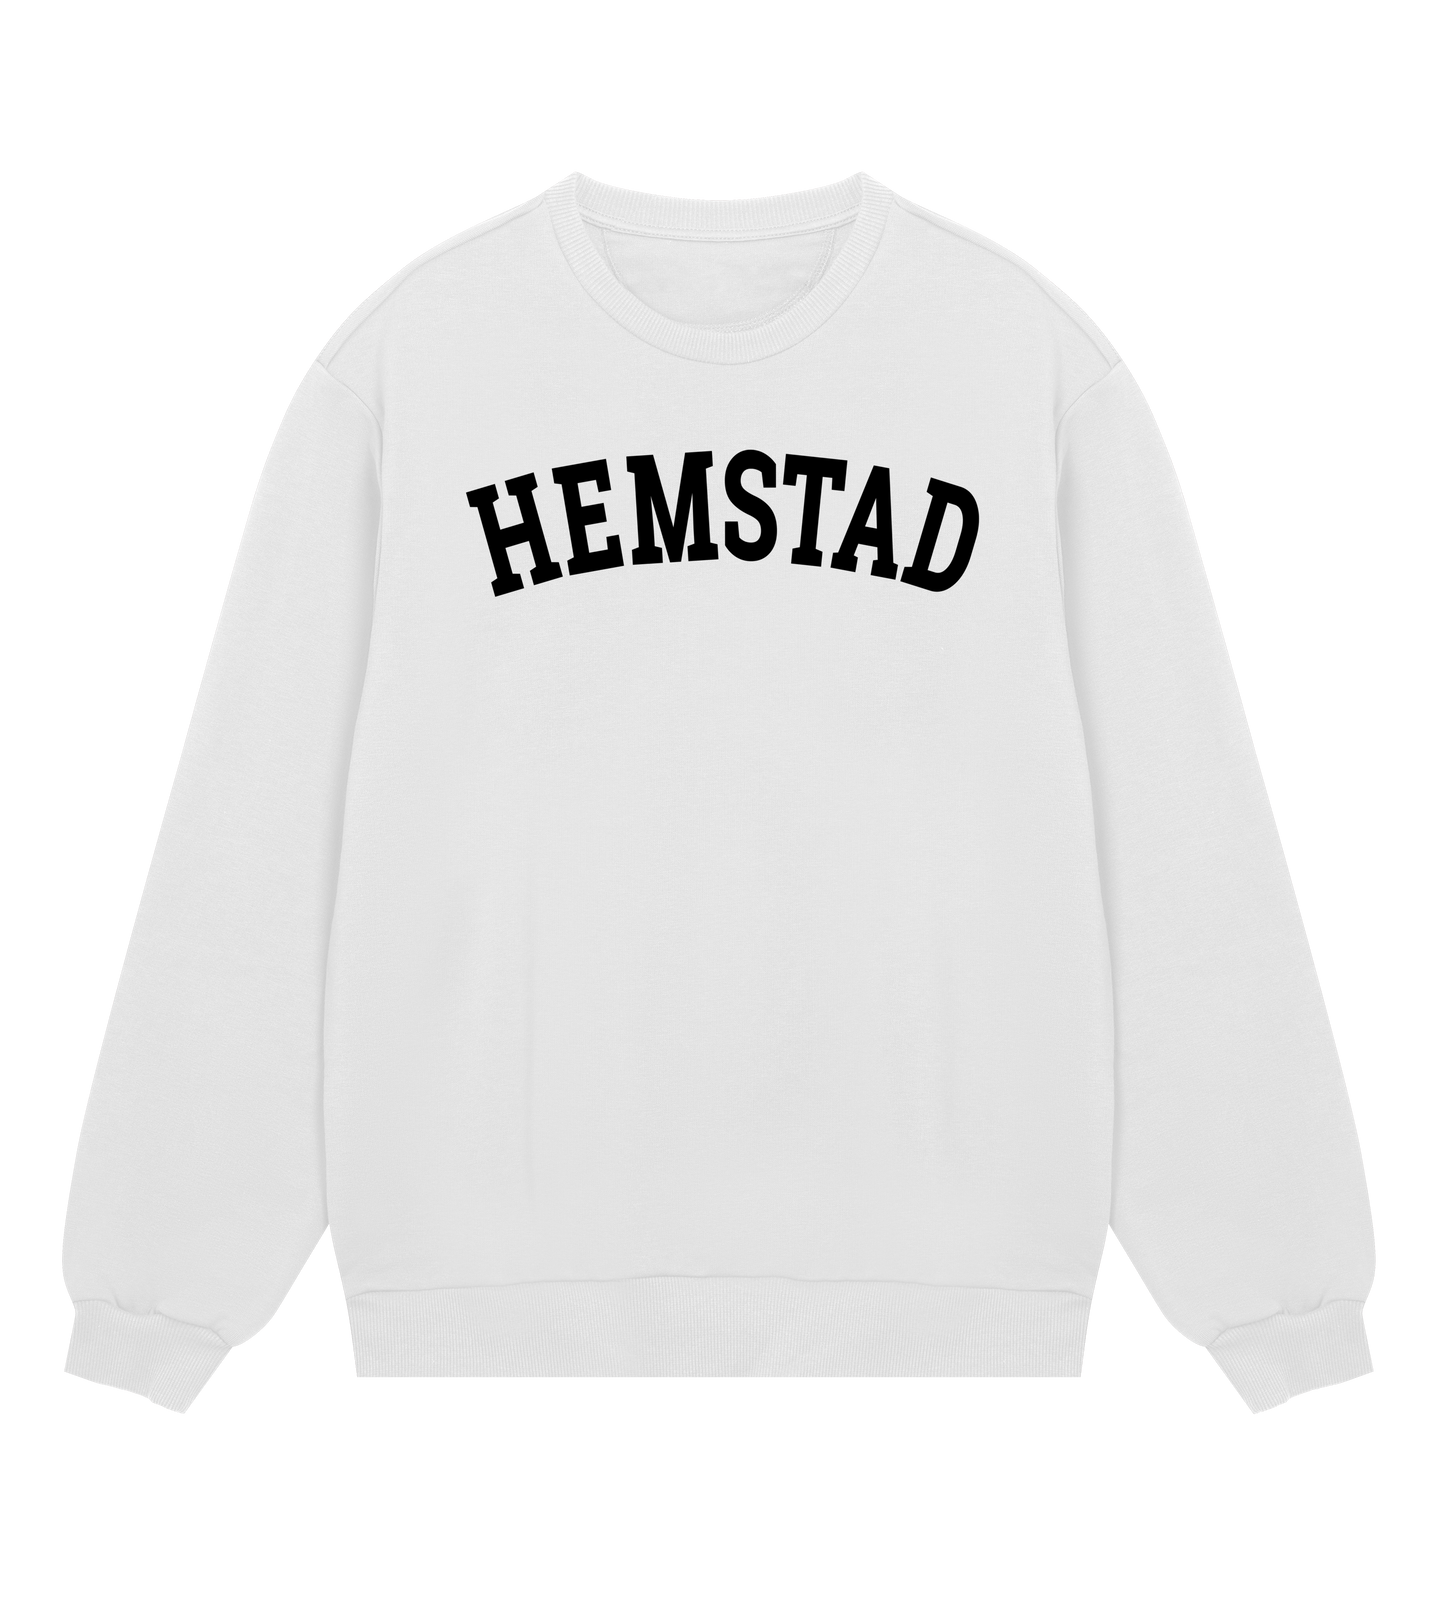 Stiko Per Larsson "Hemstad" Sweatshirt White